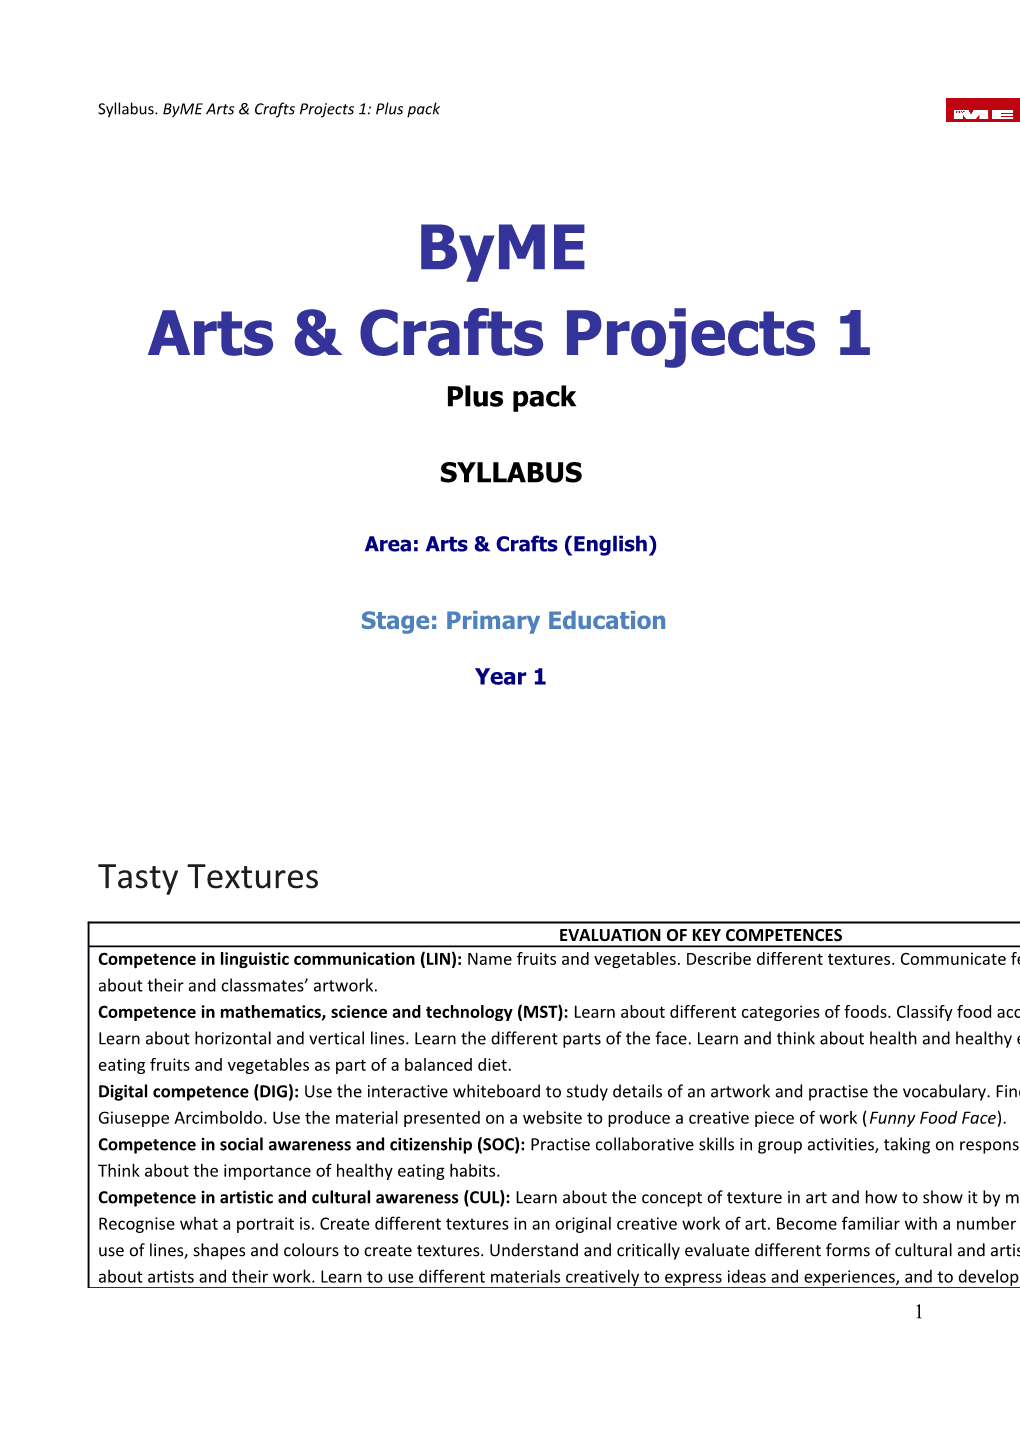 Area: Arts & Crafts (English)